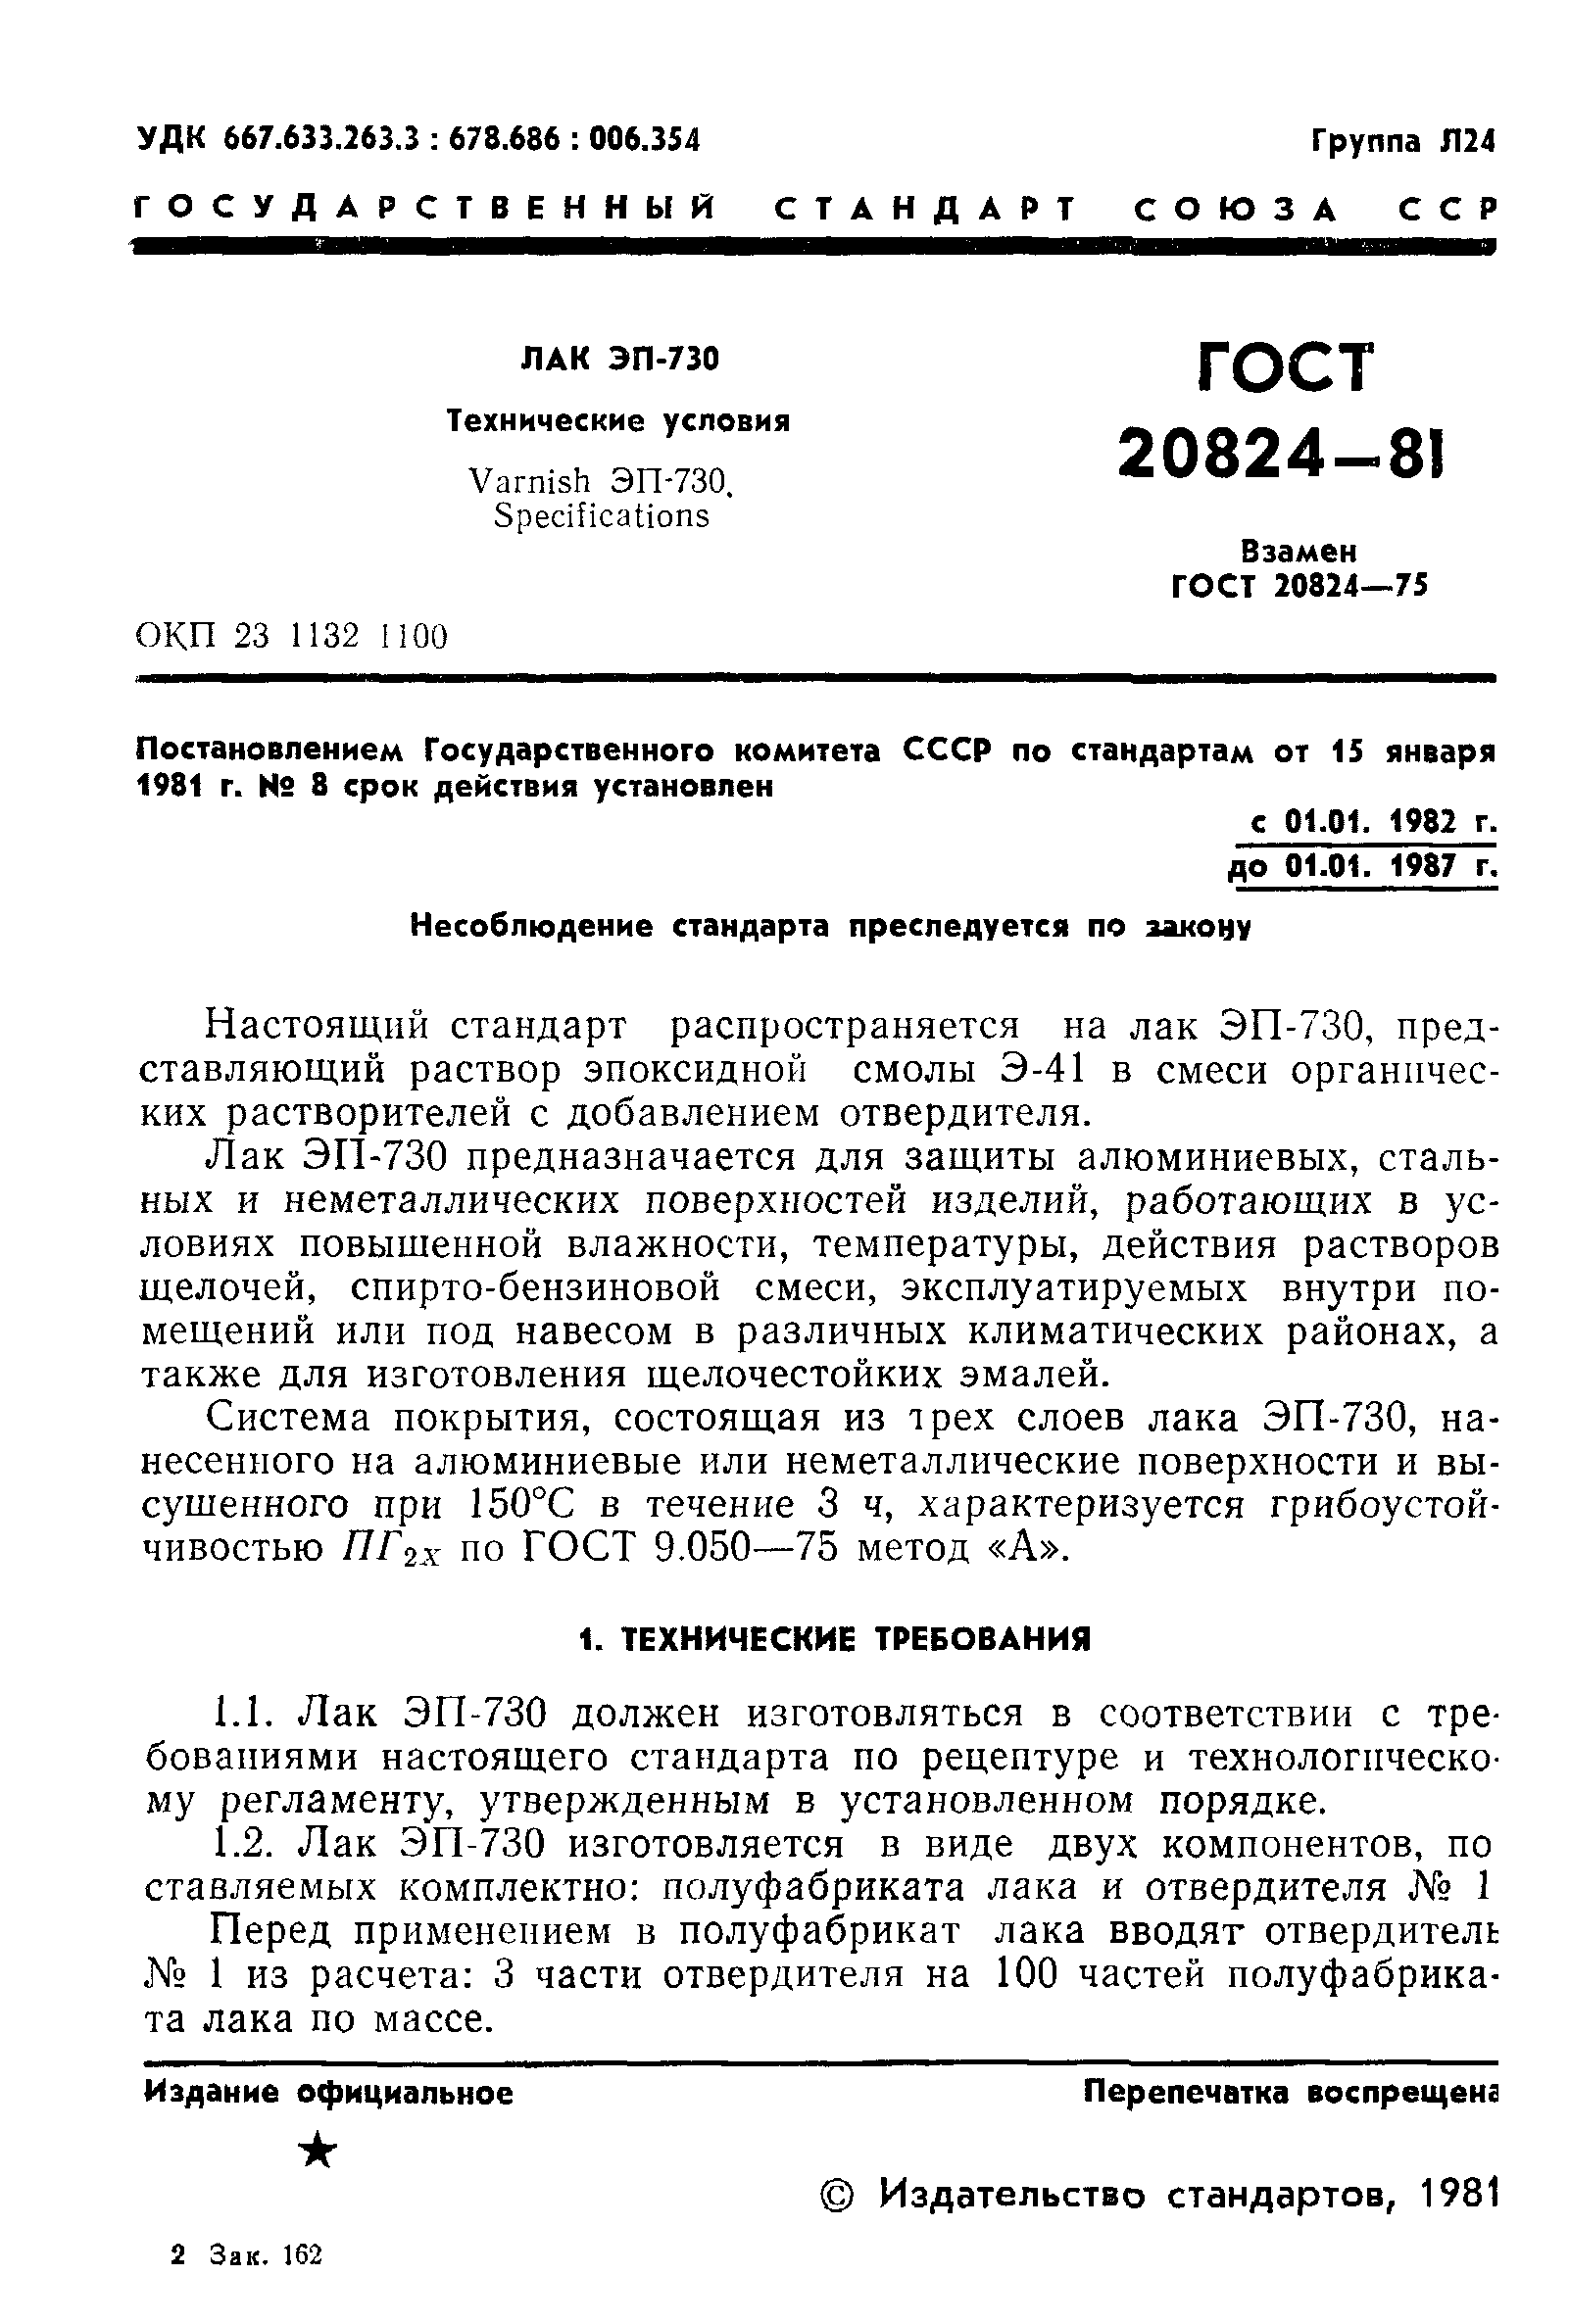 ГОСТ 20824-81